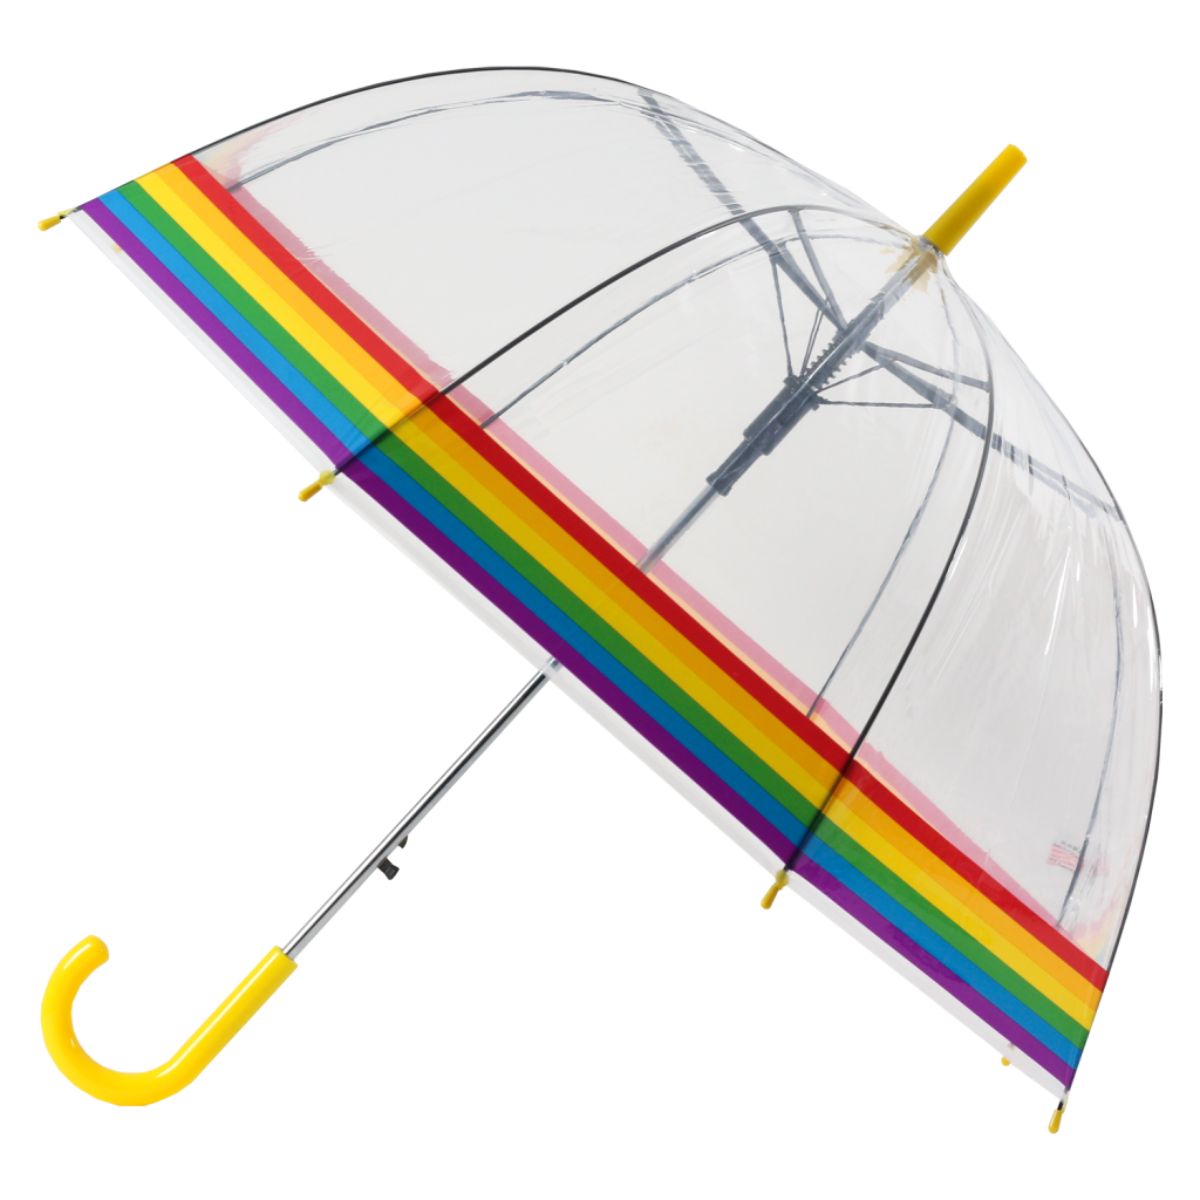 Rainbow Clear Dome Umbrella - yellow handle - angled